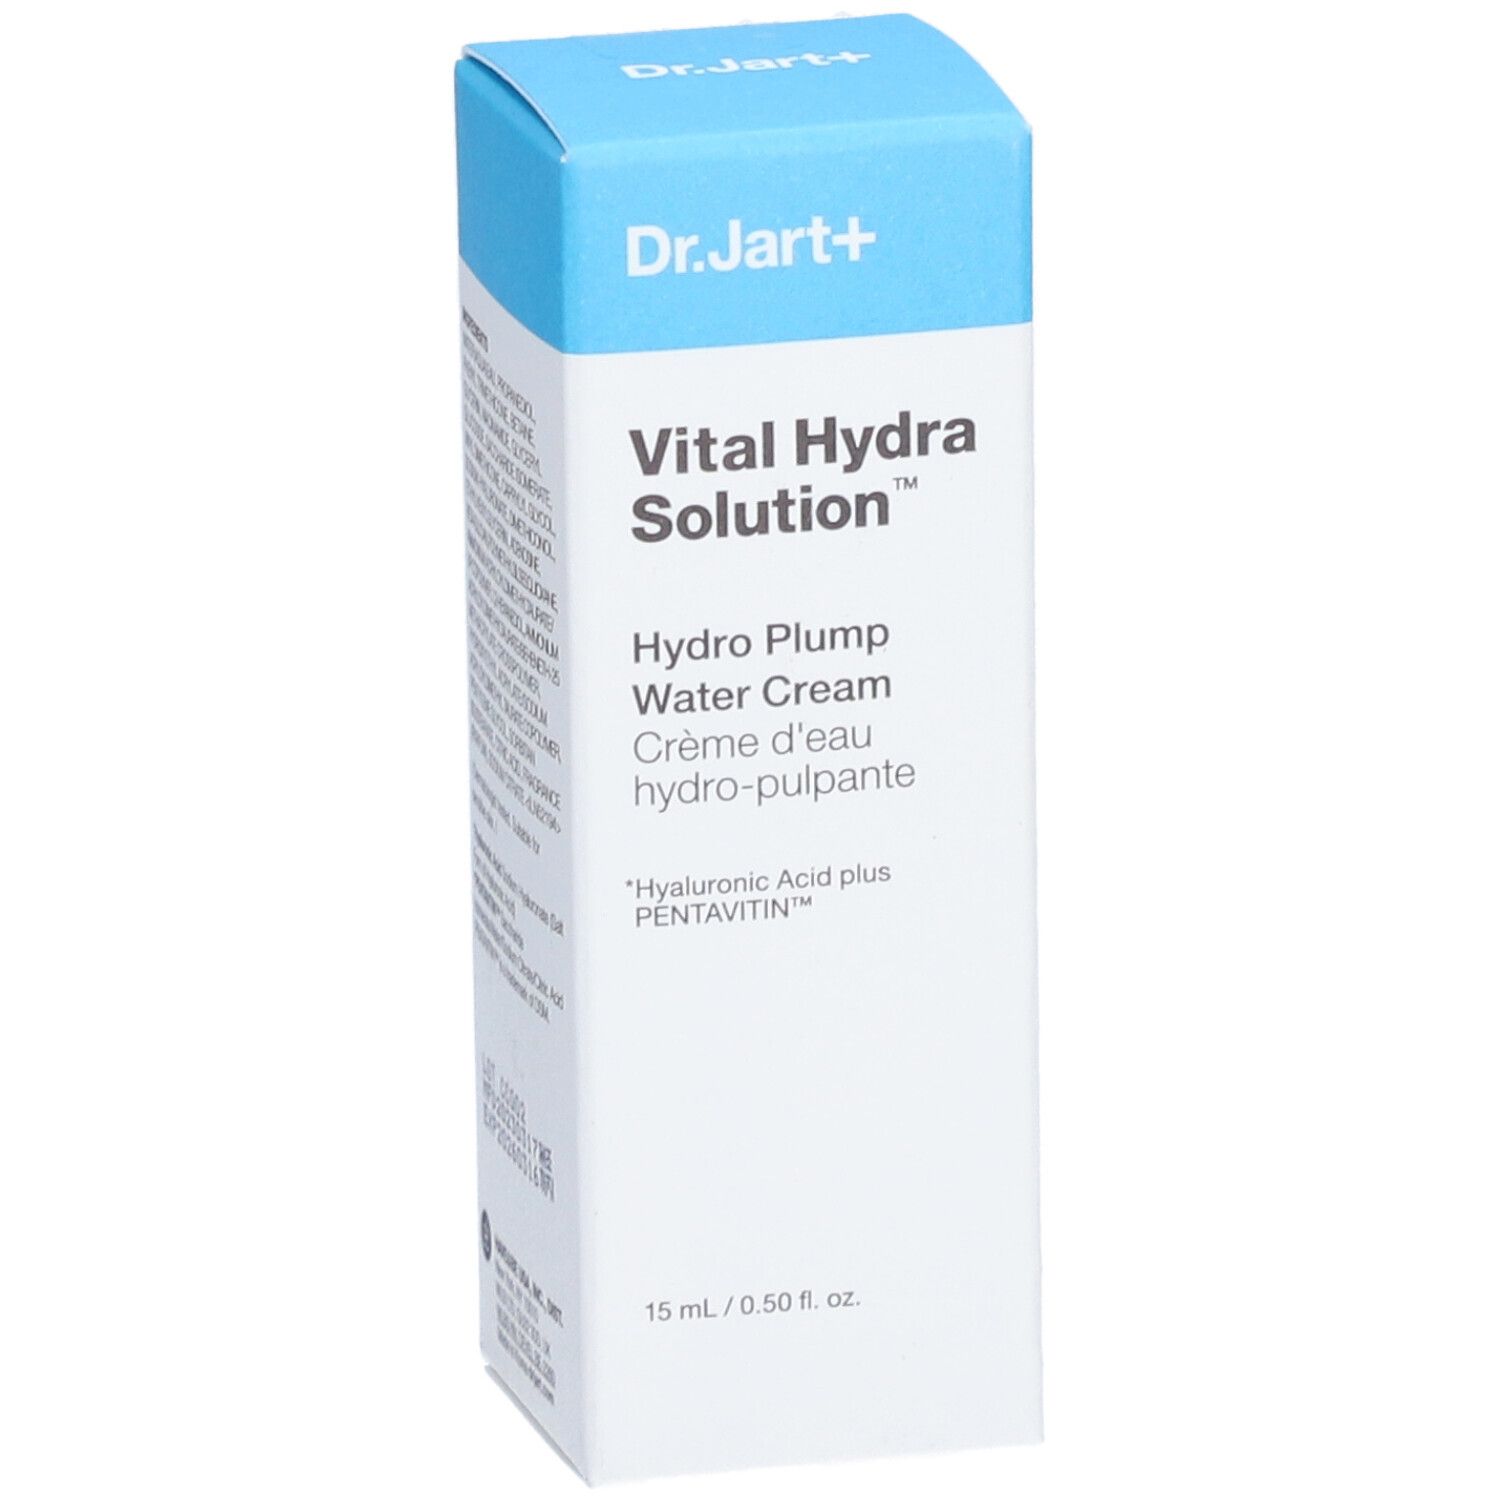 Dr.Jart VITAL HYDRO SOLUTION™ Hydro Plump Water Cream + Hyaluronic Acid